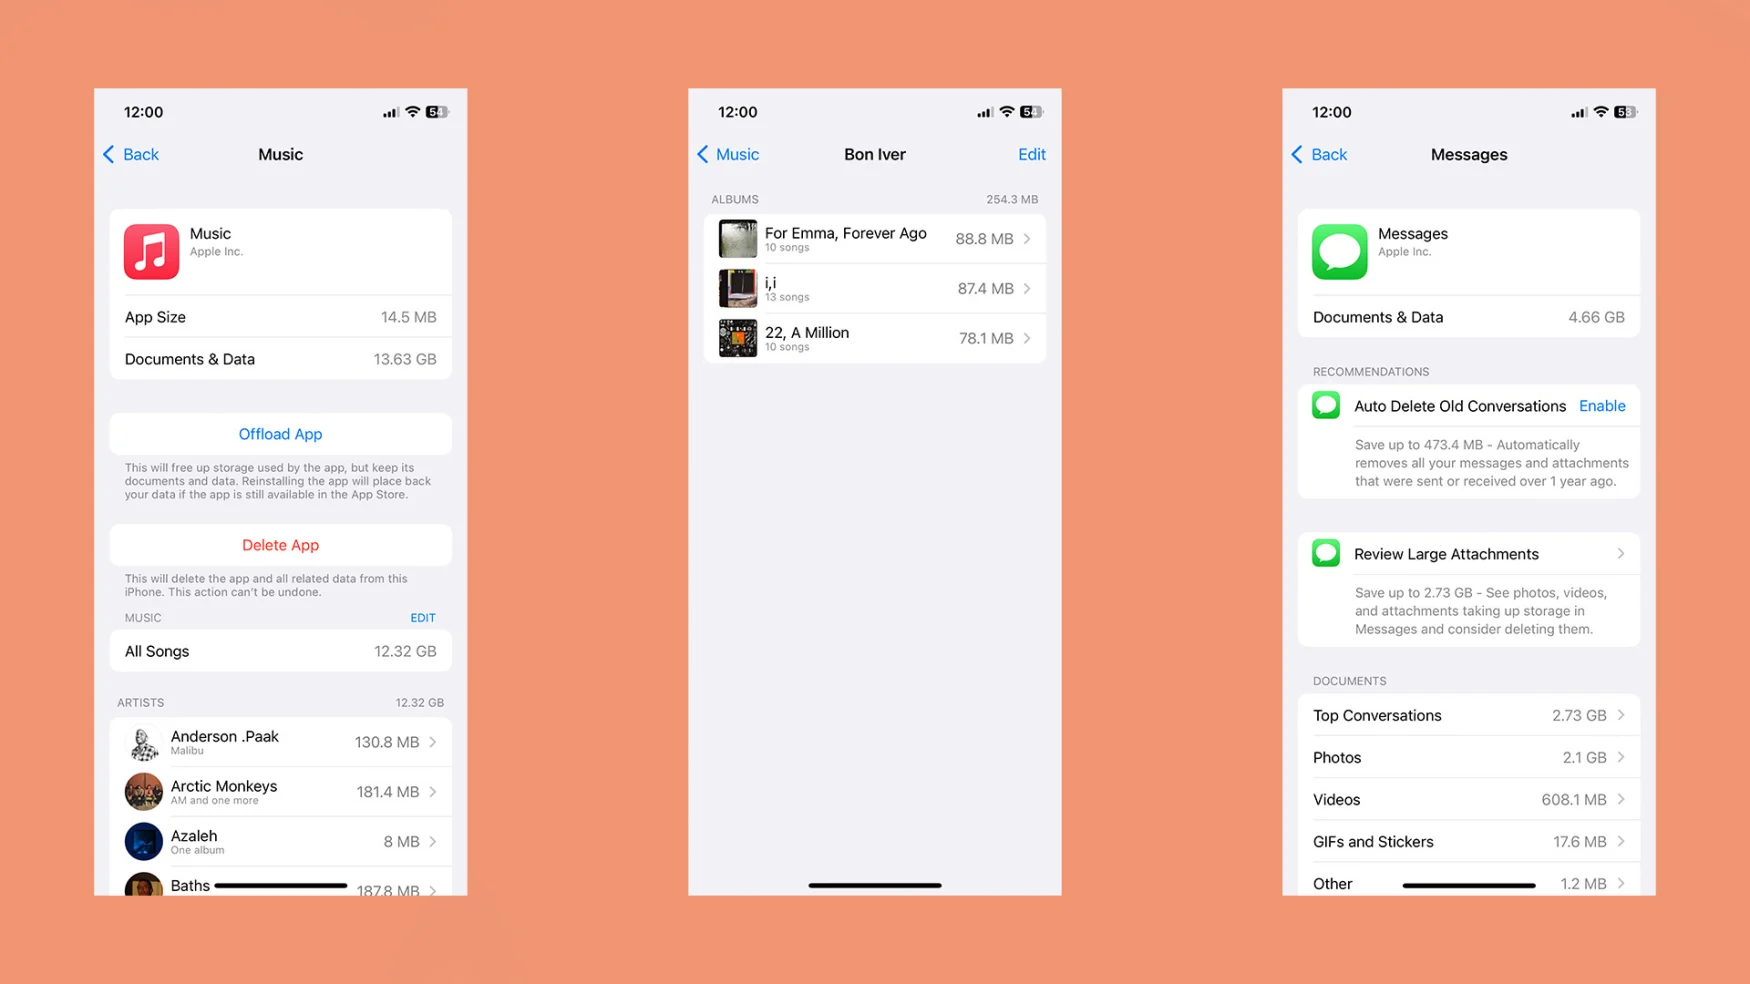 Скриншоты разделов Apple Music и Messages в утилите iPhone Storage. 